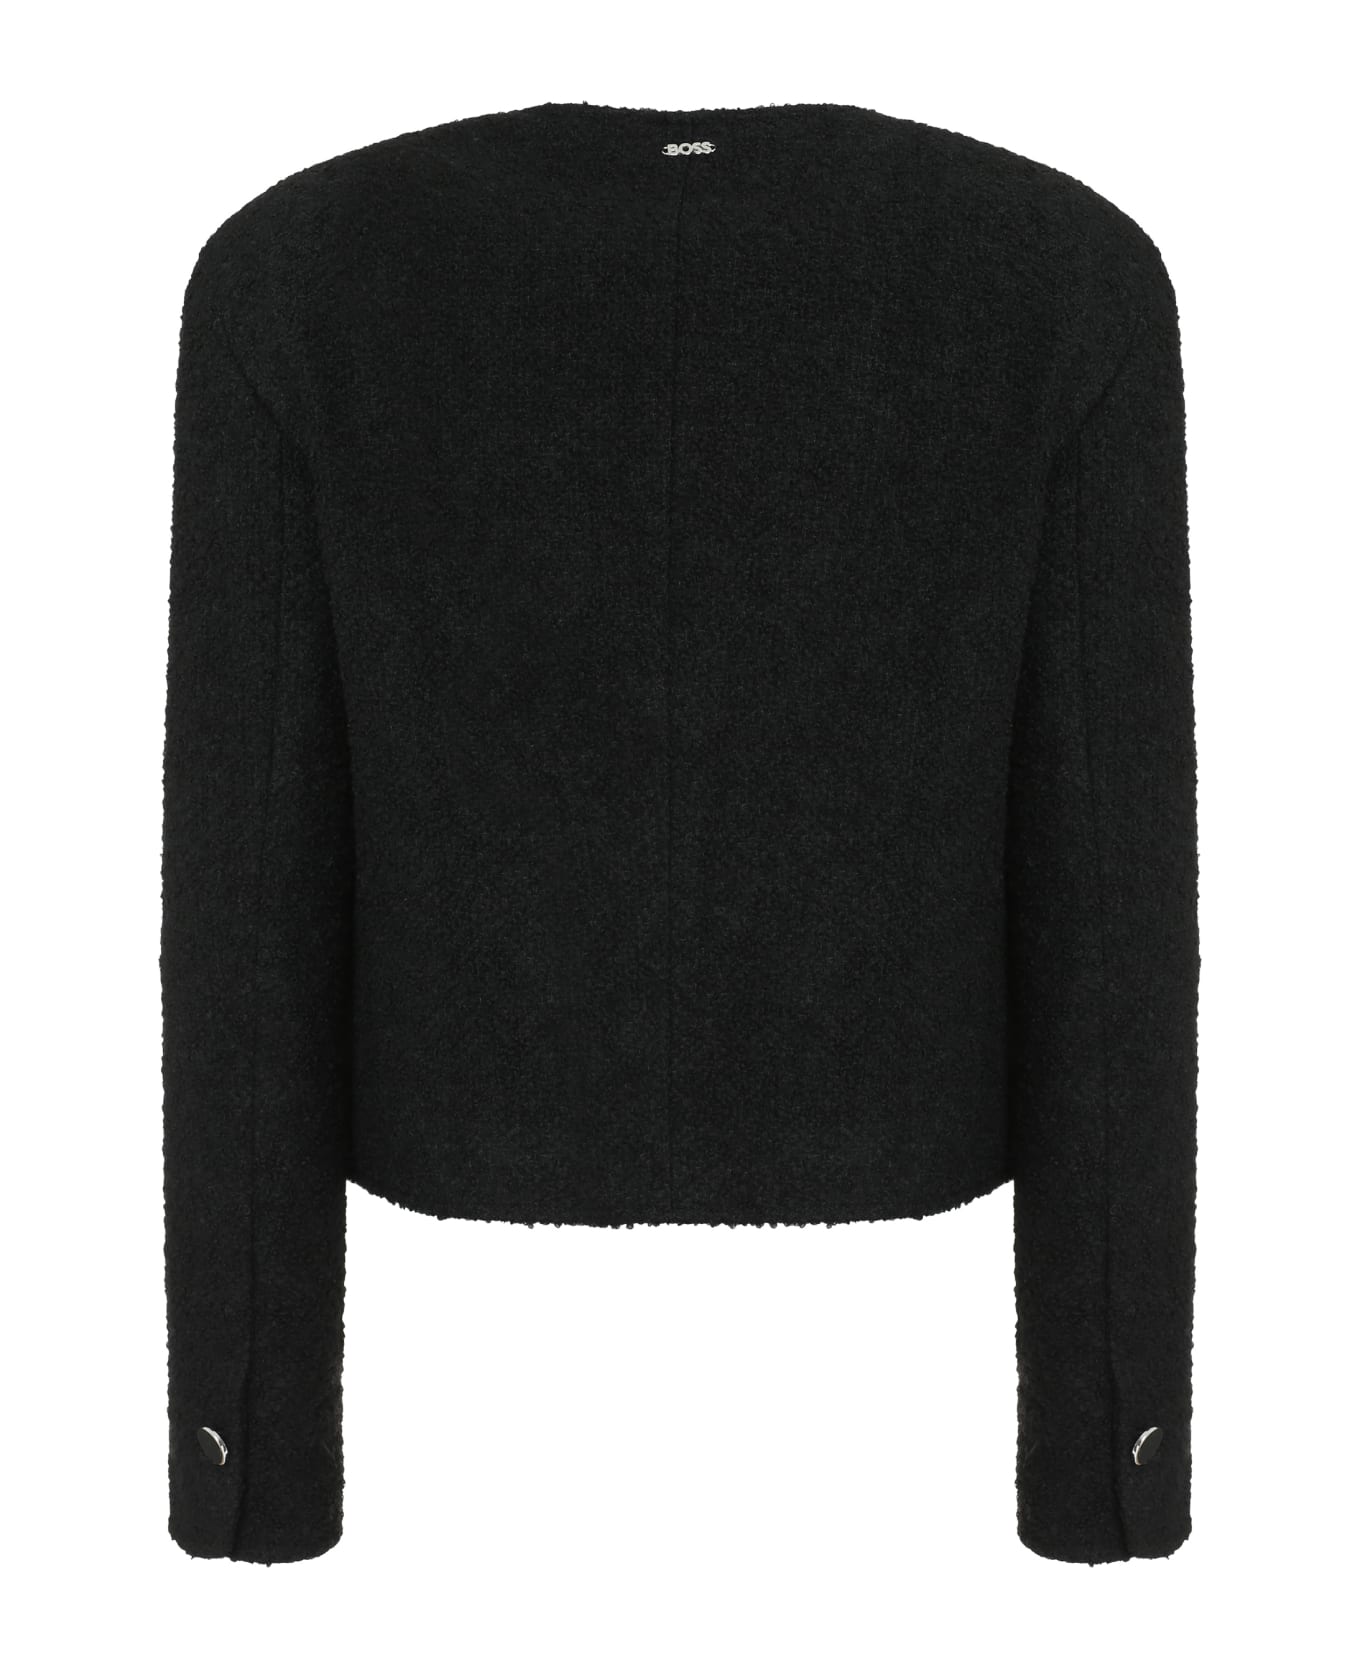 Hugo Boss Jesetta Tweed Jacket - black ジャケット